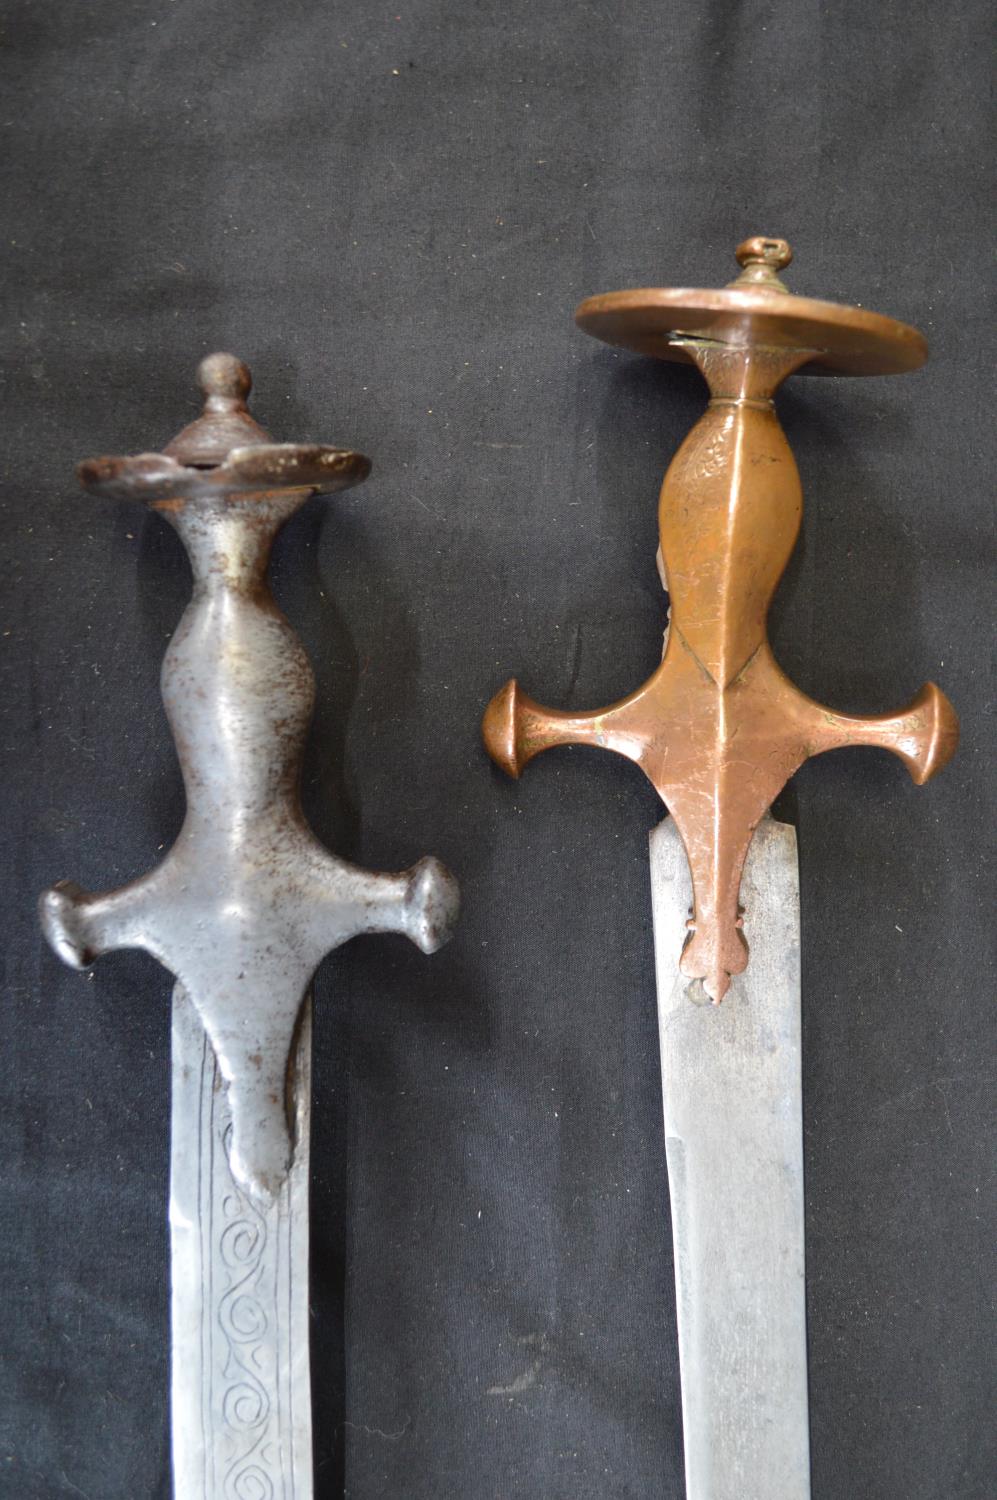 Two Tulwar swords having curved steel blades - 82.5cm x 84cm long Please note descriptions are not - Bild 4 aus 4